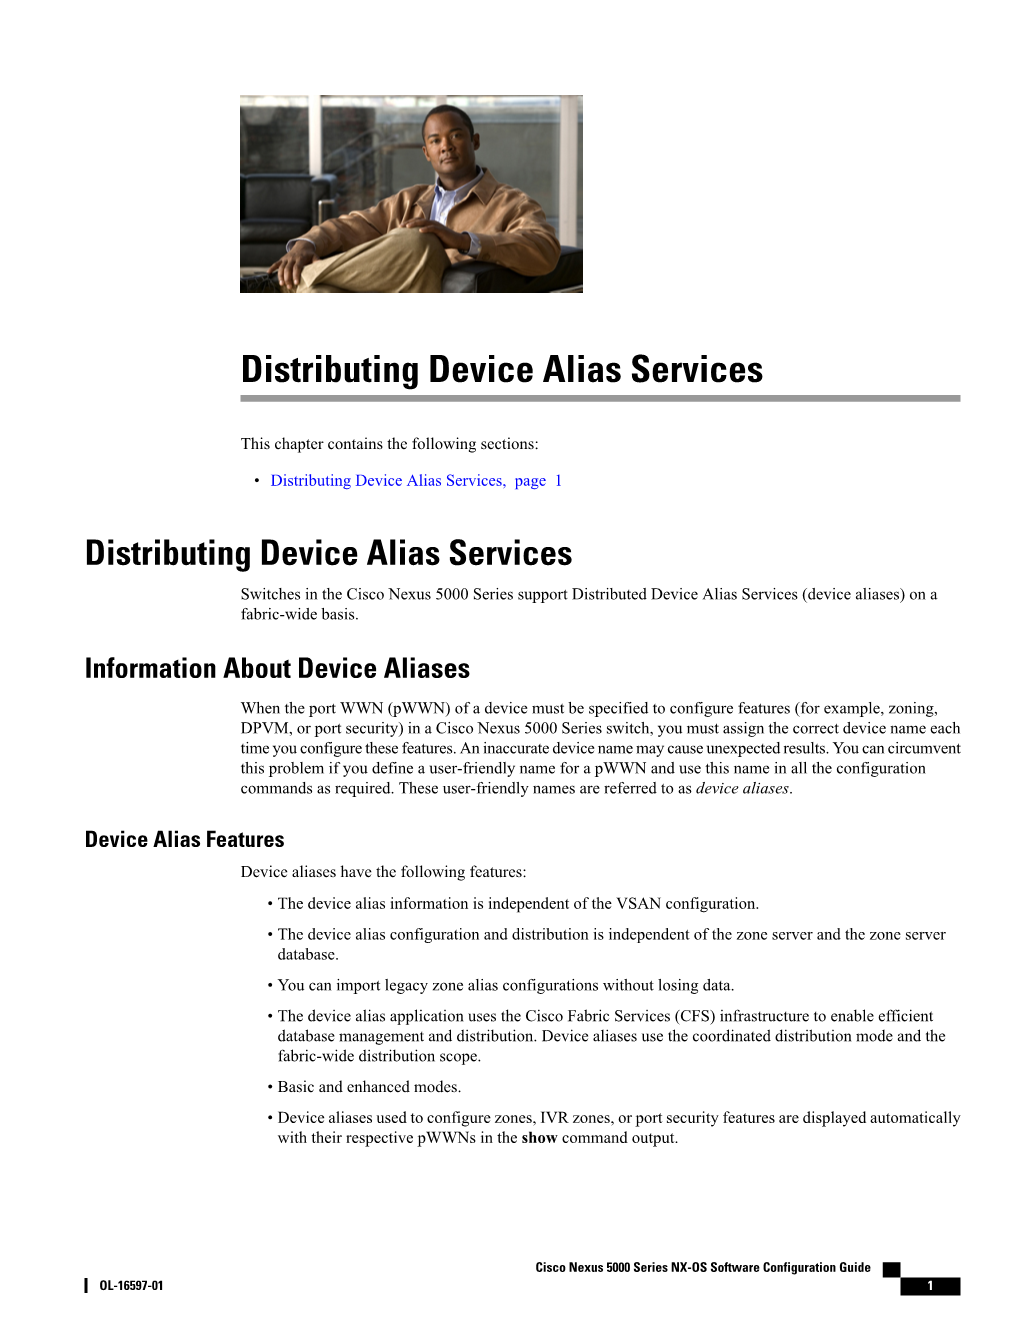 Distributing Device Alias Services